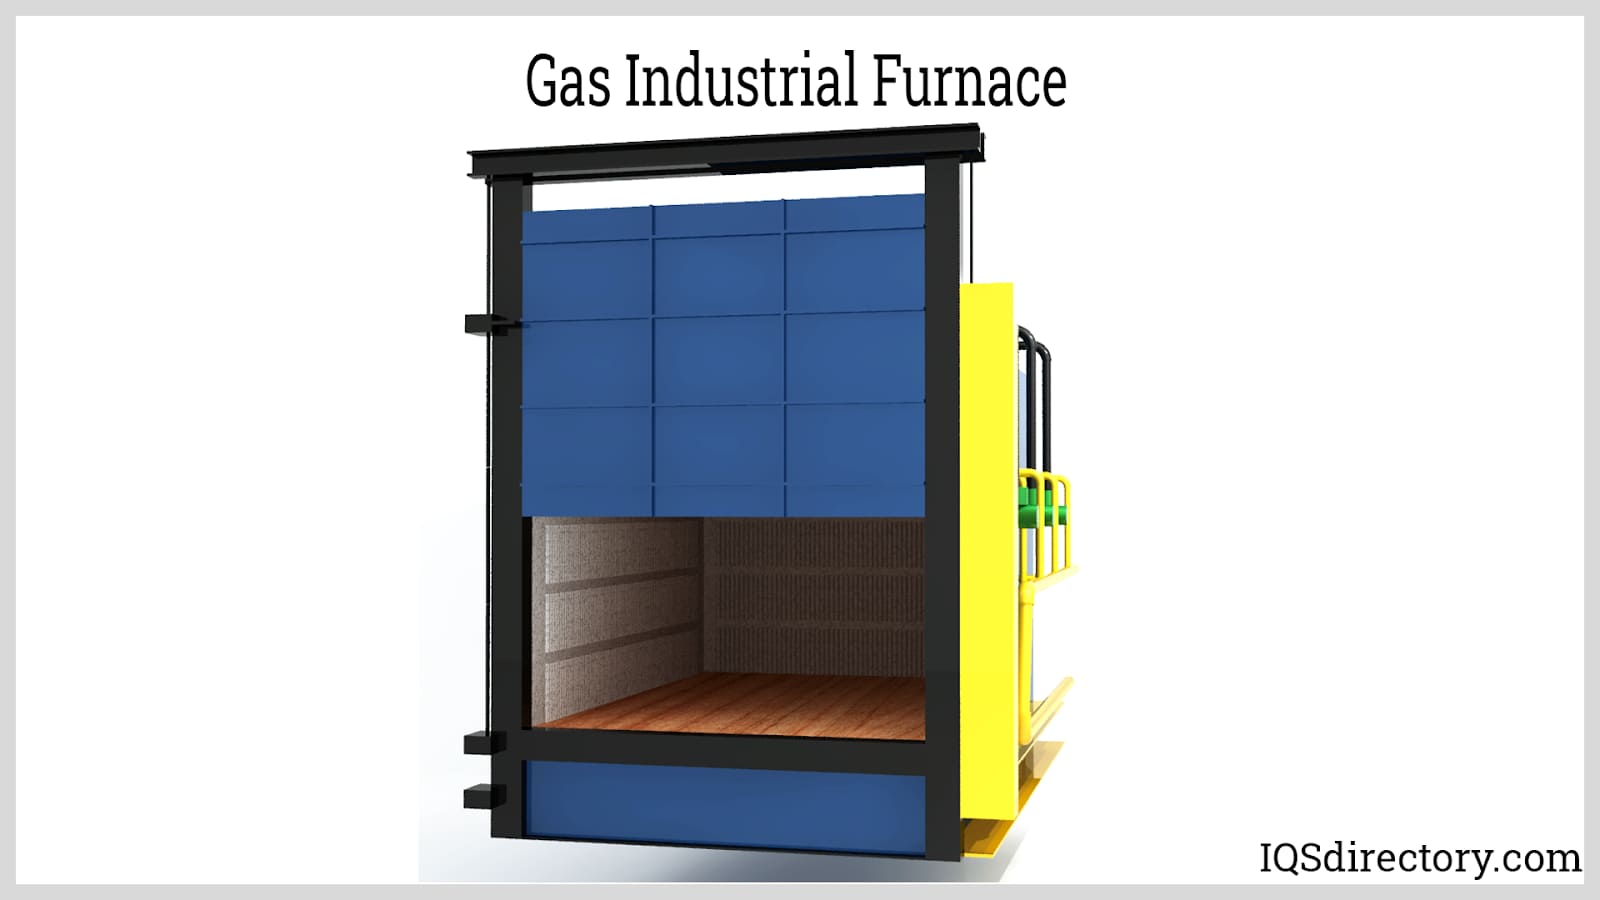 Gas Industrial Furnace